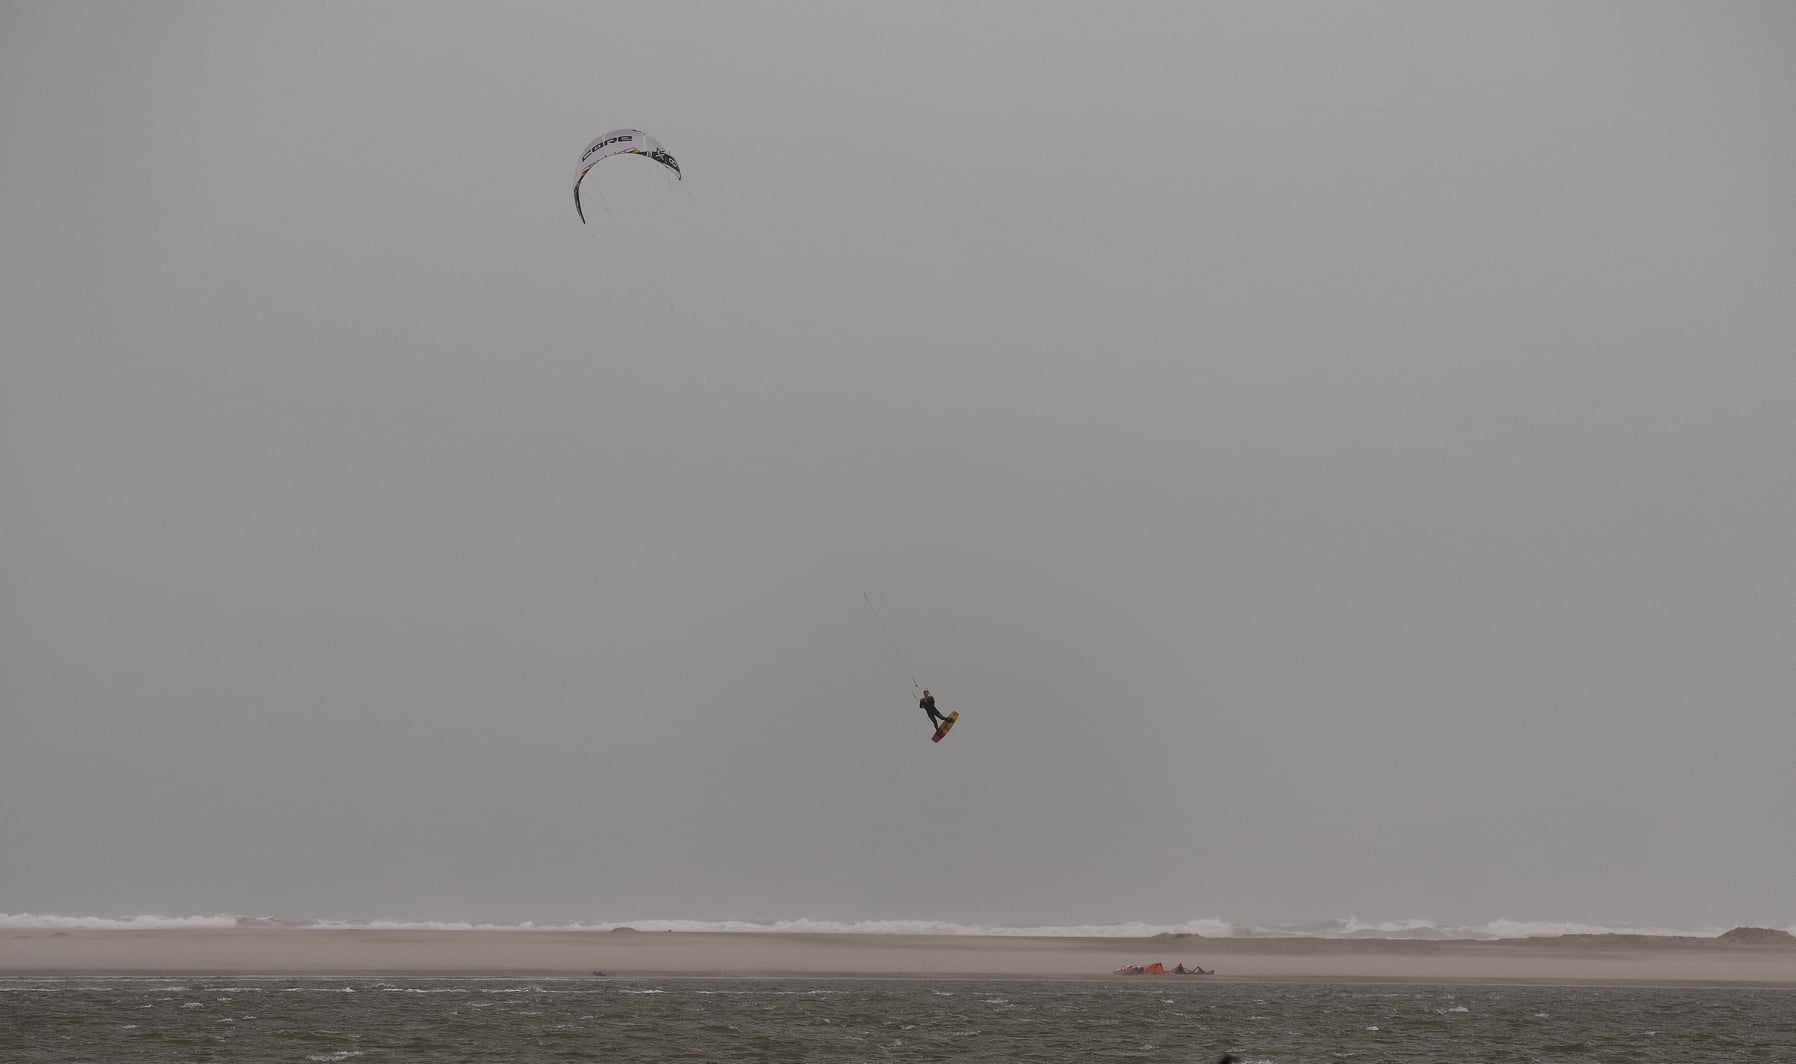 Kitesurfers in actie op kitespot Zandmotor. Foto: Patrick van der Ven